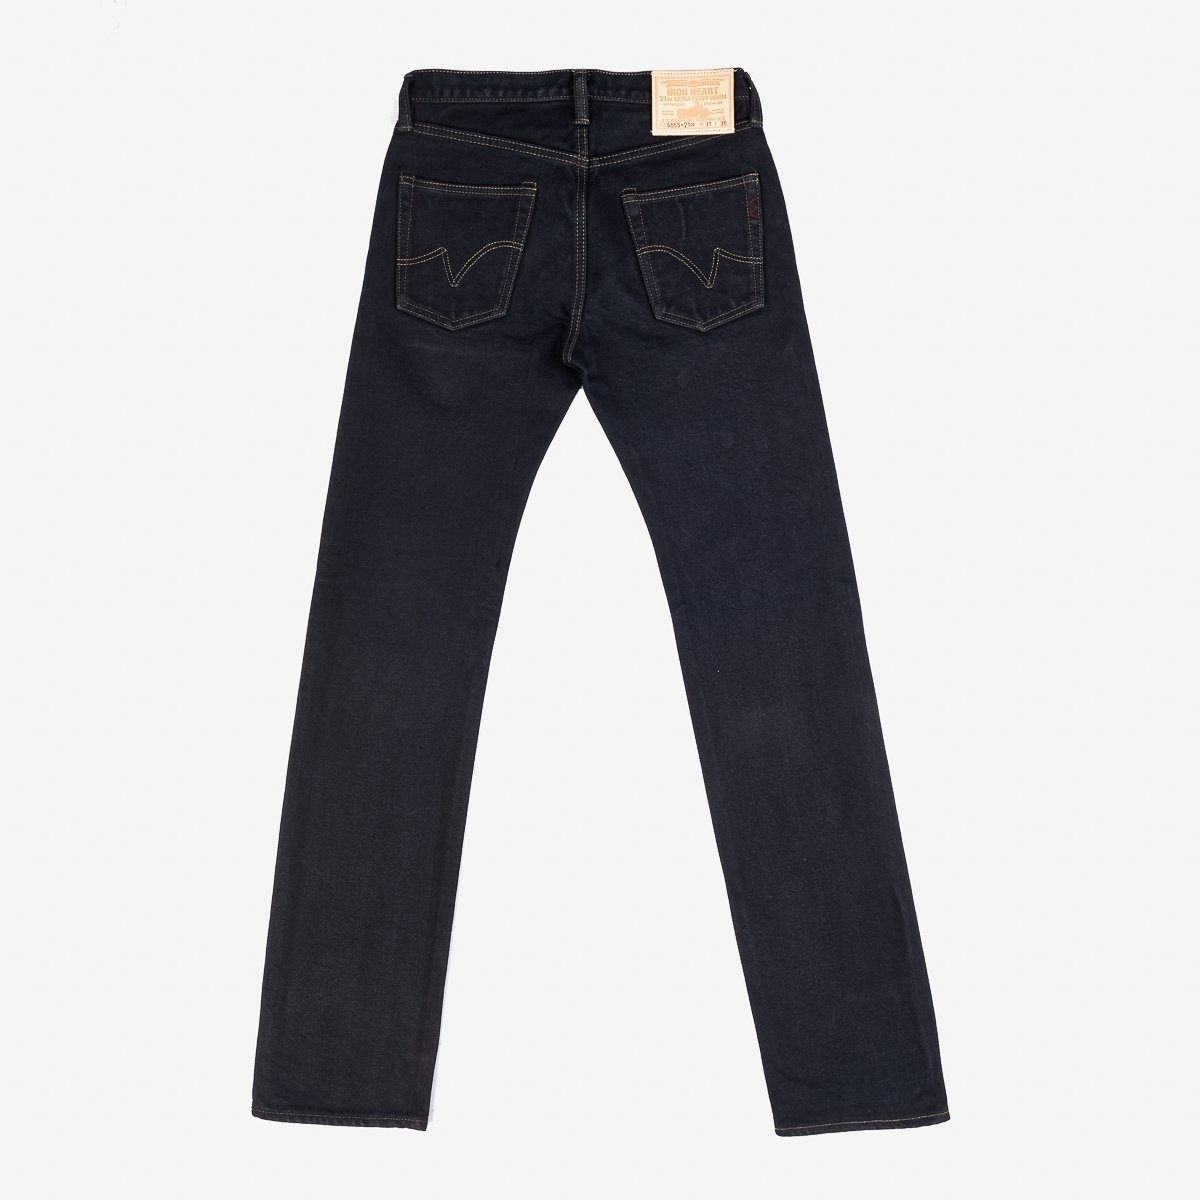 IH-666S-21od 21oz Selvedge Denim Slim Straight Cut Jeans - Indigo Overdyed Black - 5